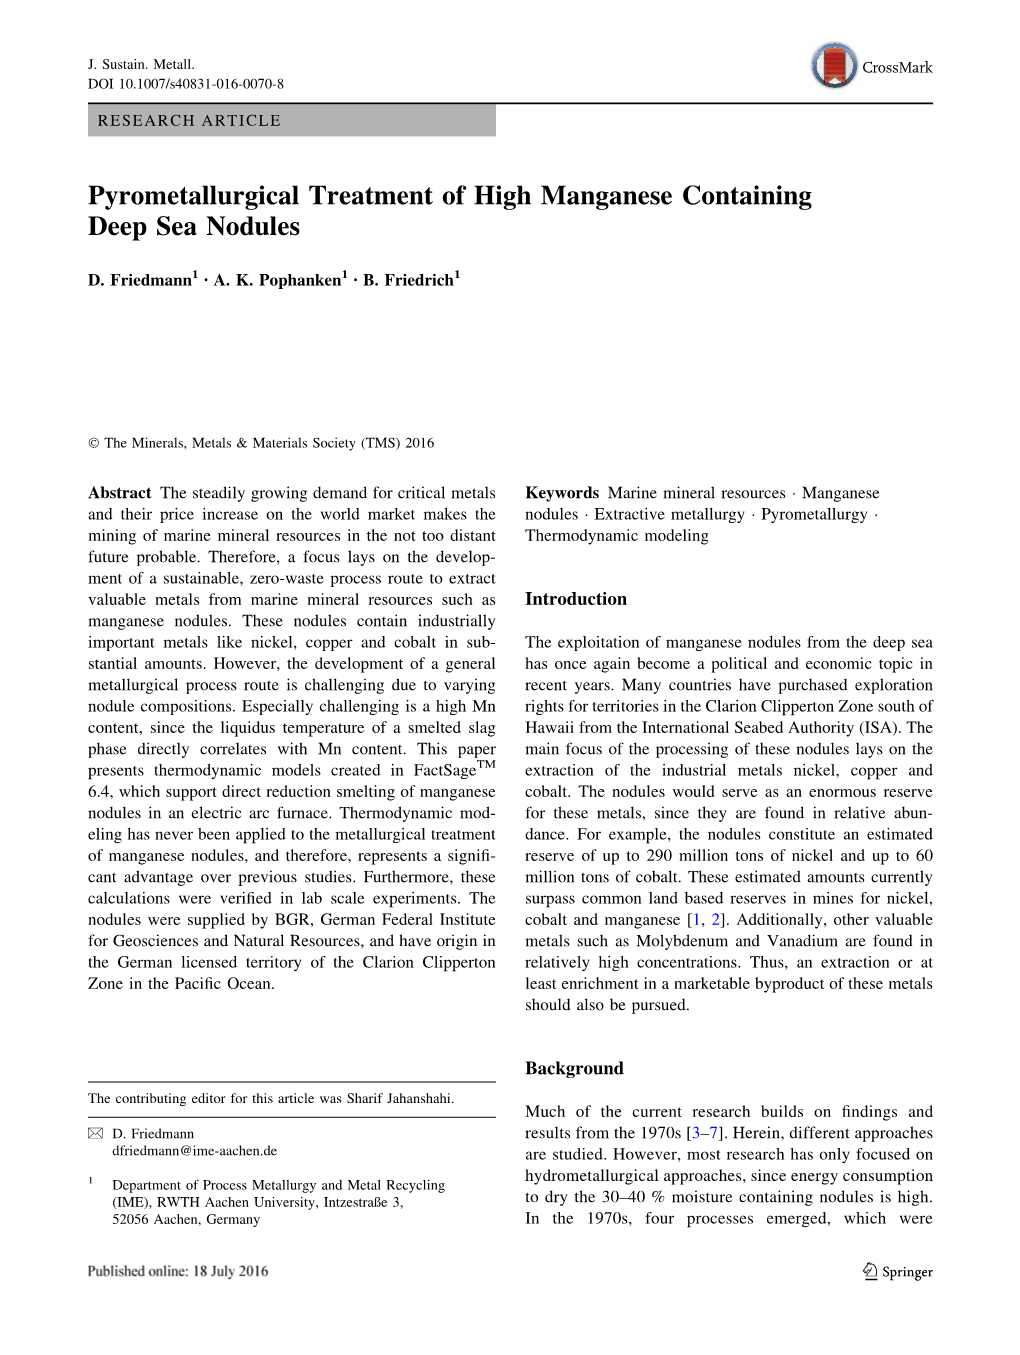 Pyrometallurgical Treatment of High Manganese Containing Deep Sea Nodules